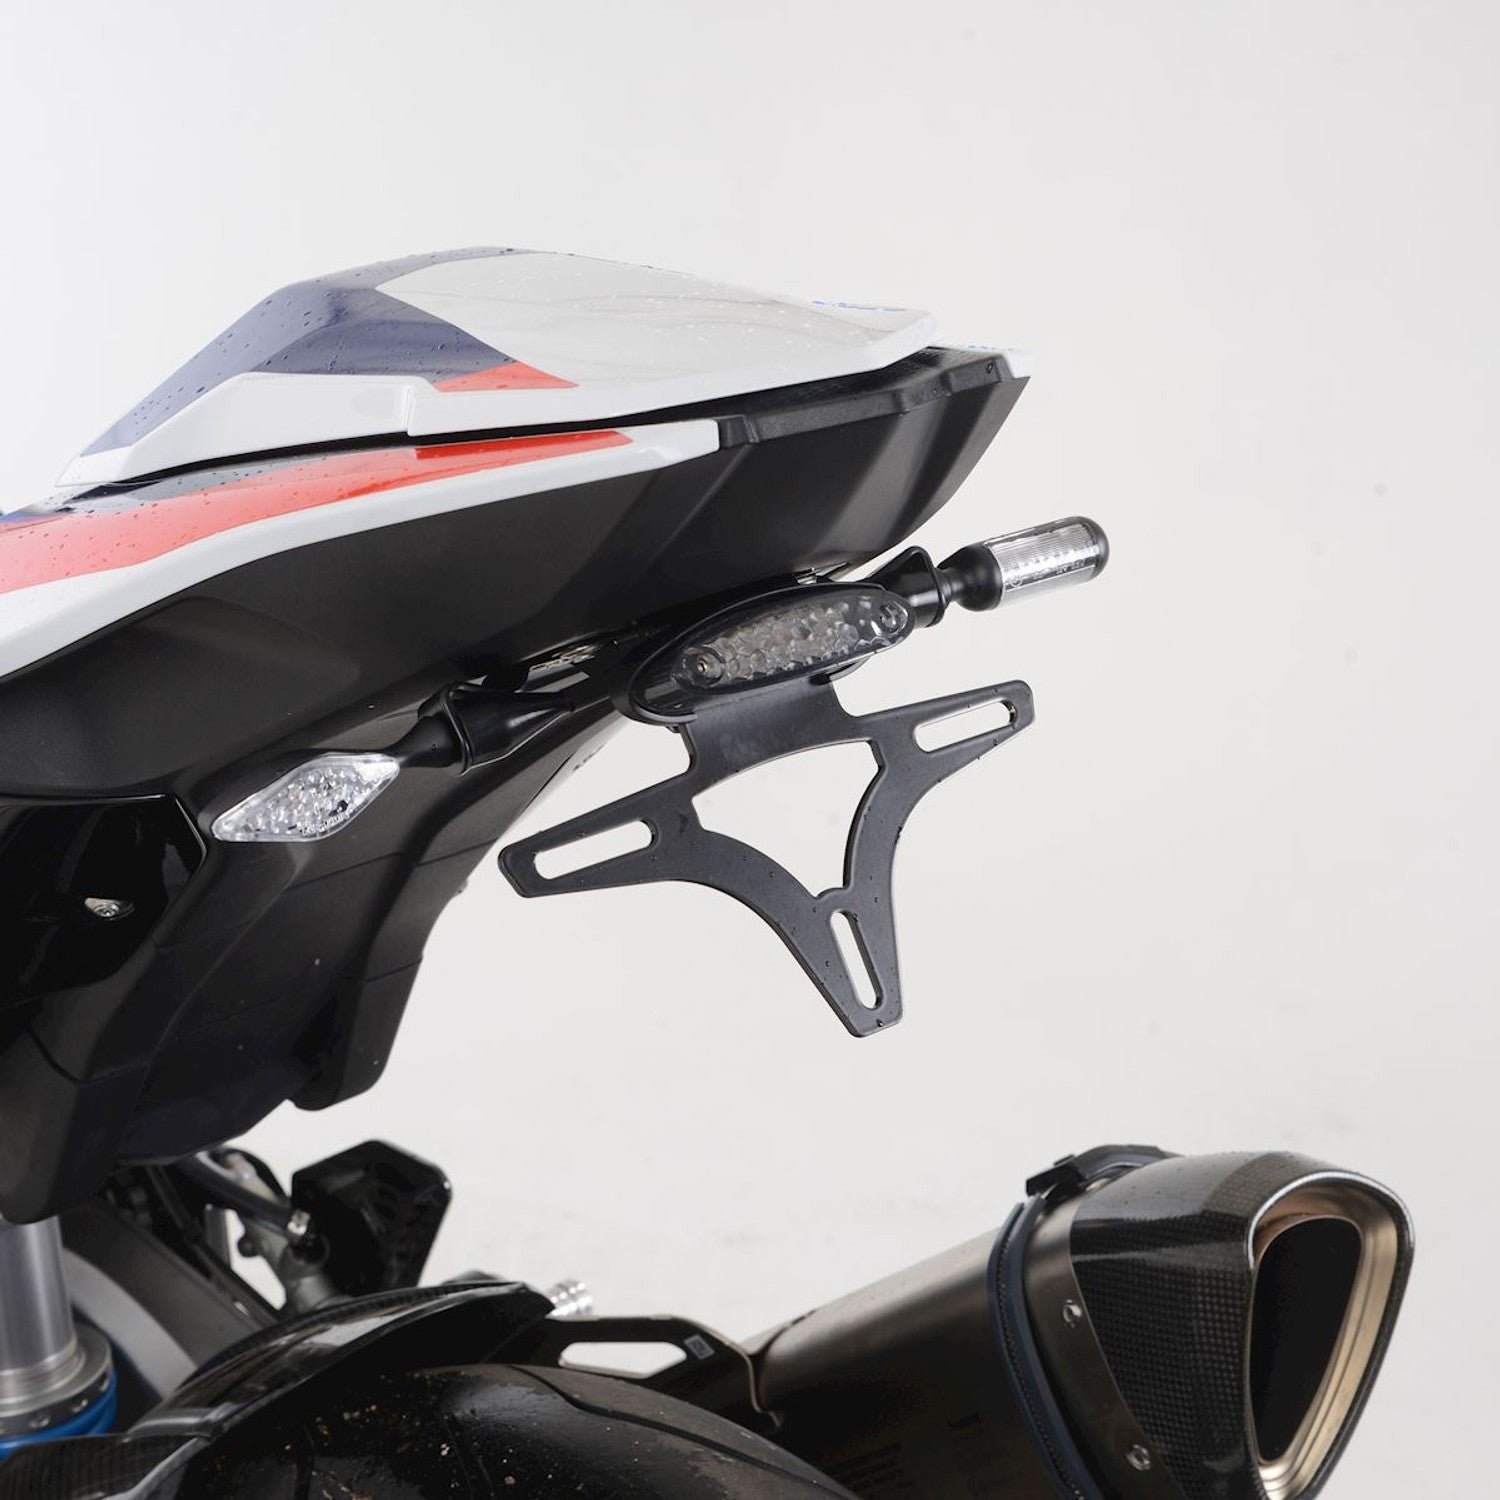 BMWS1000rr 2021 - バイク車体